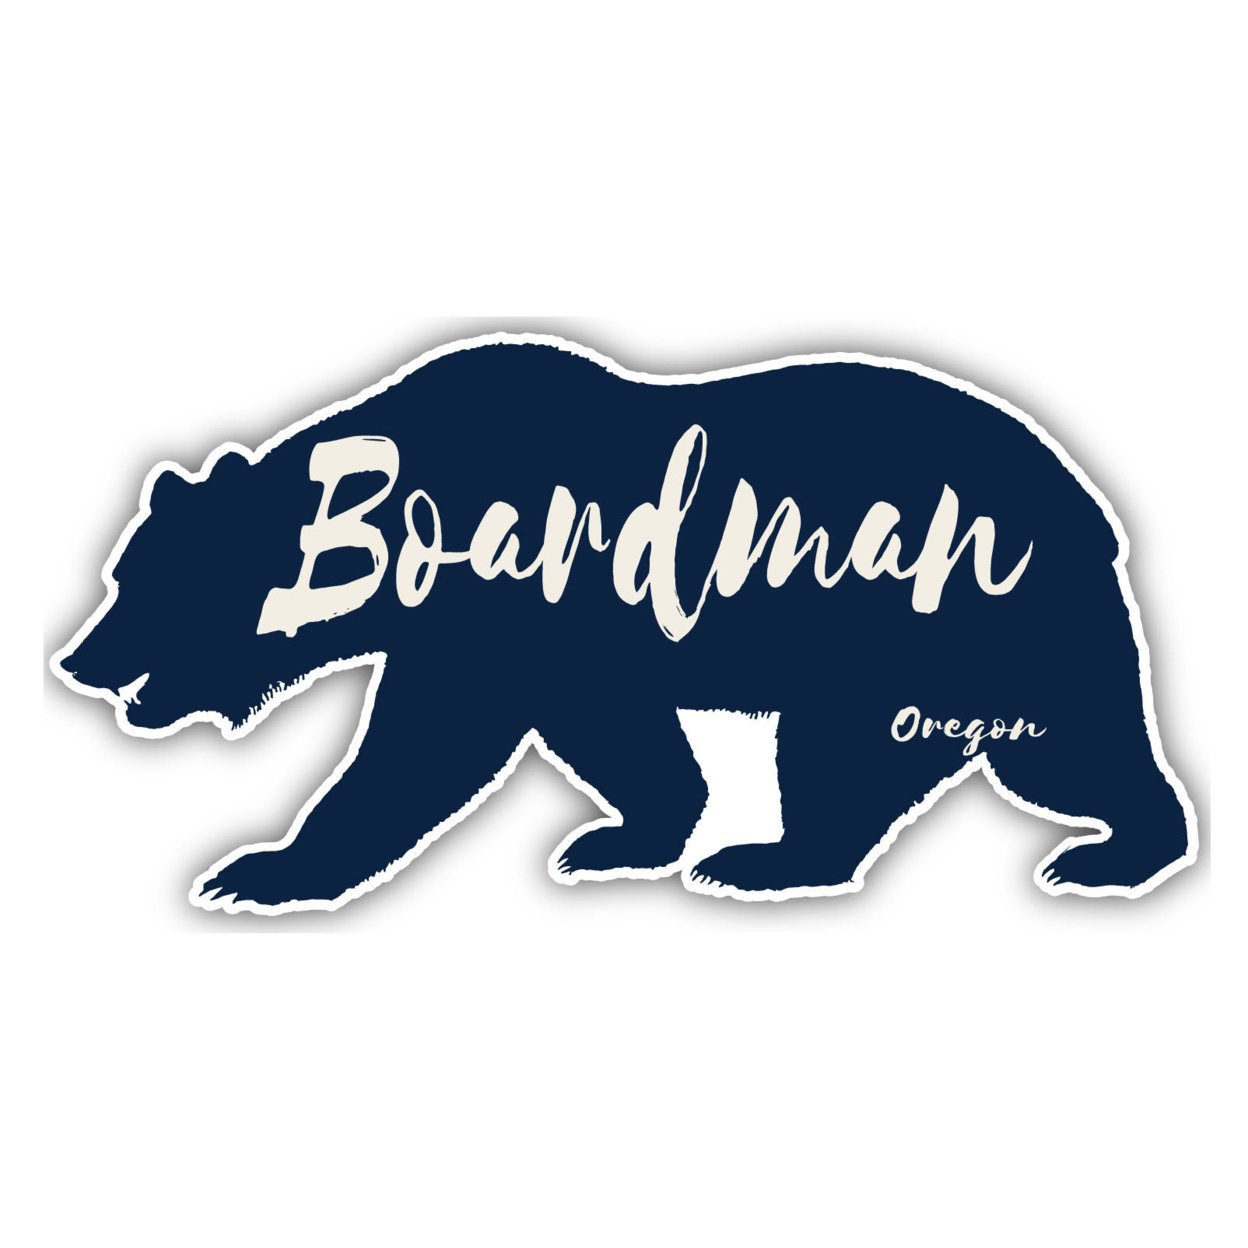 Boardman Oregon Souvenir Decorative Stickers (Choose Theme And Size) - Single Unit, 12-Inch, Camp Life